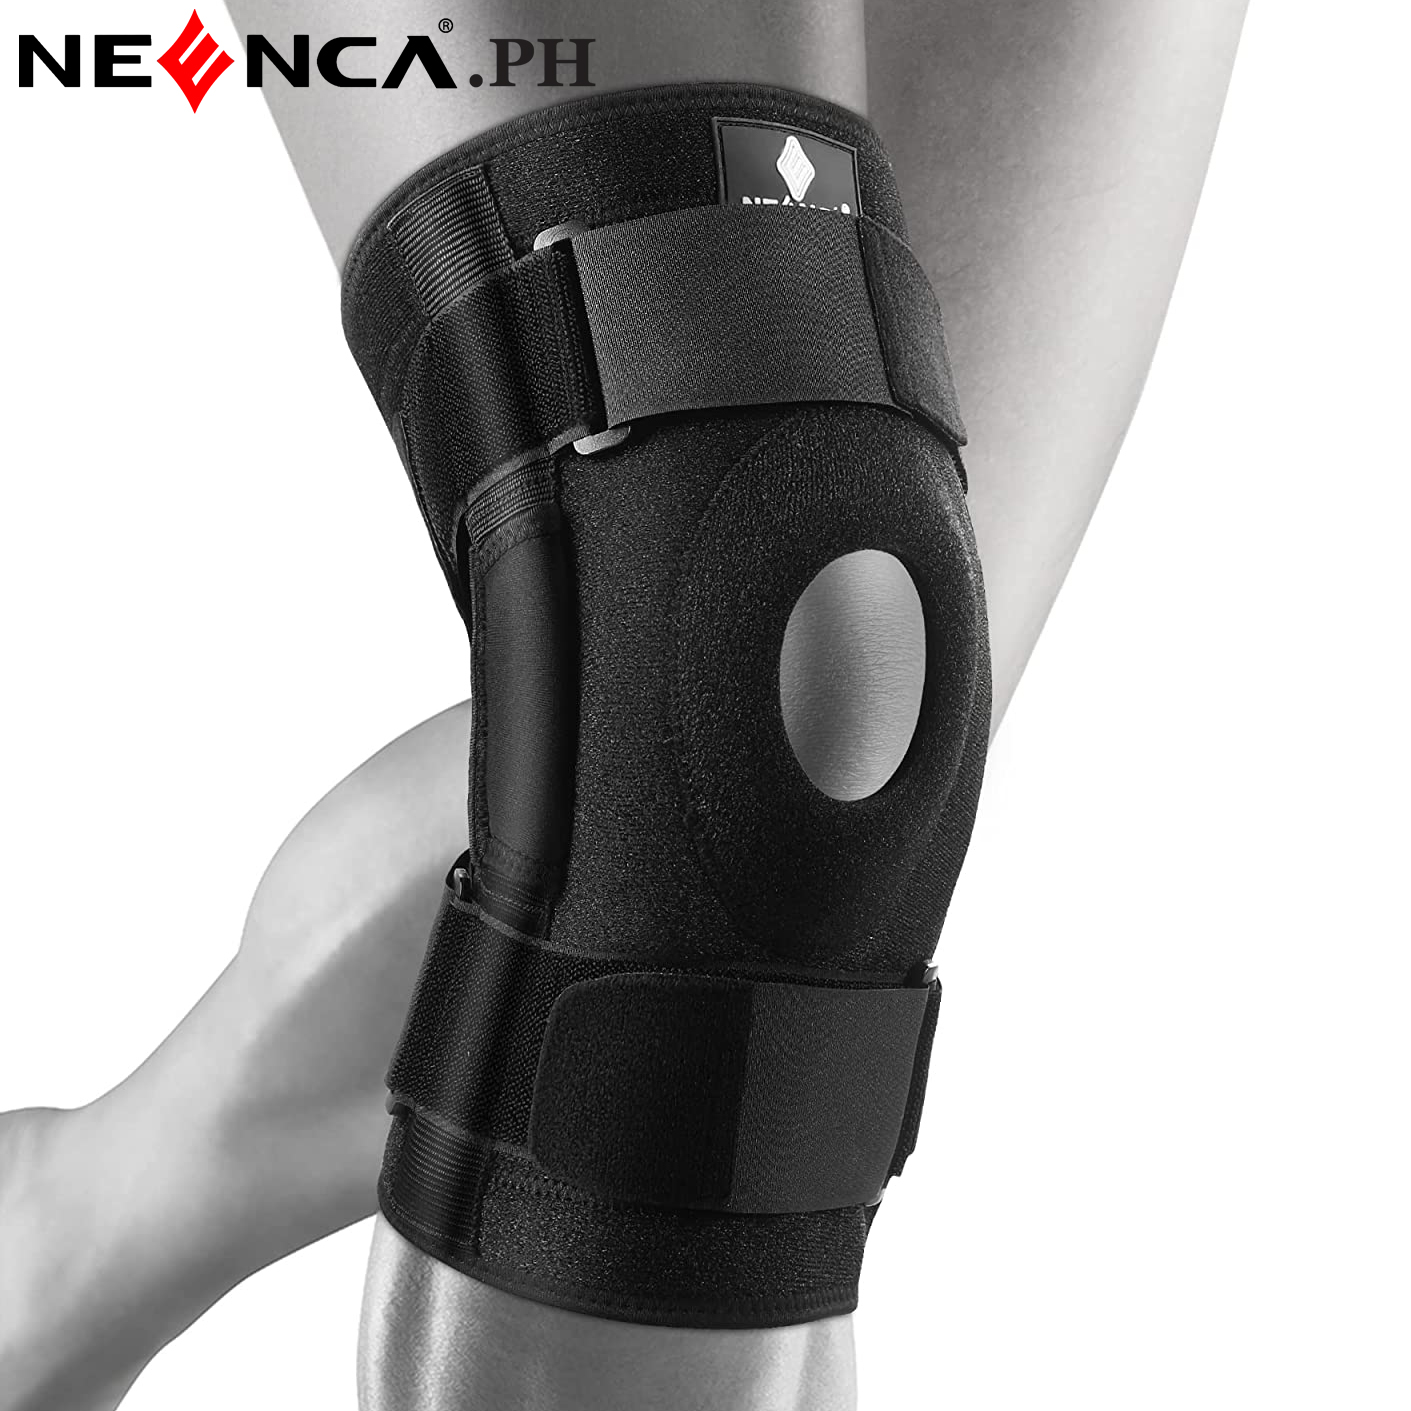 Buy Orthopedic Hinged Knee Brace Support online